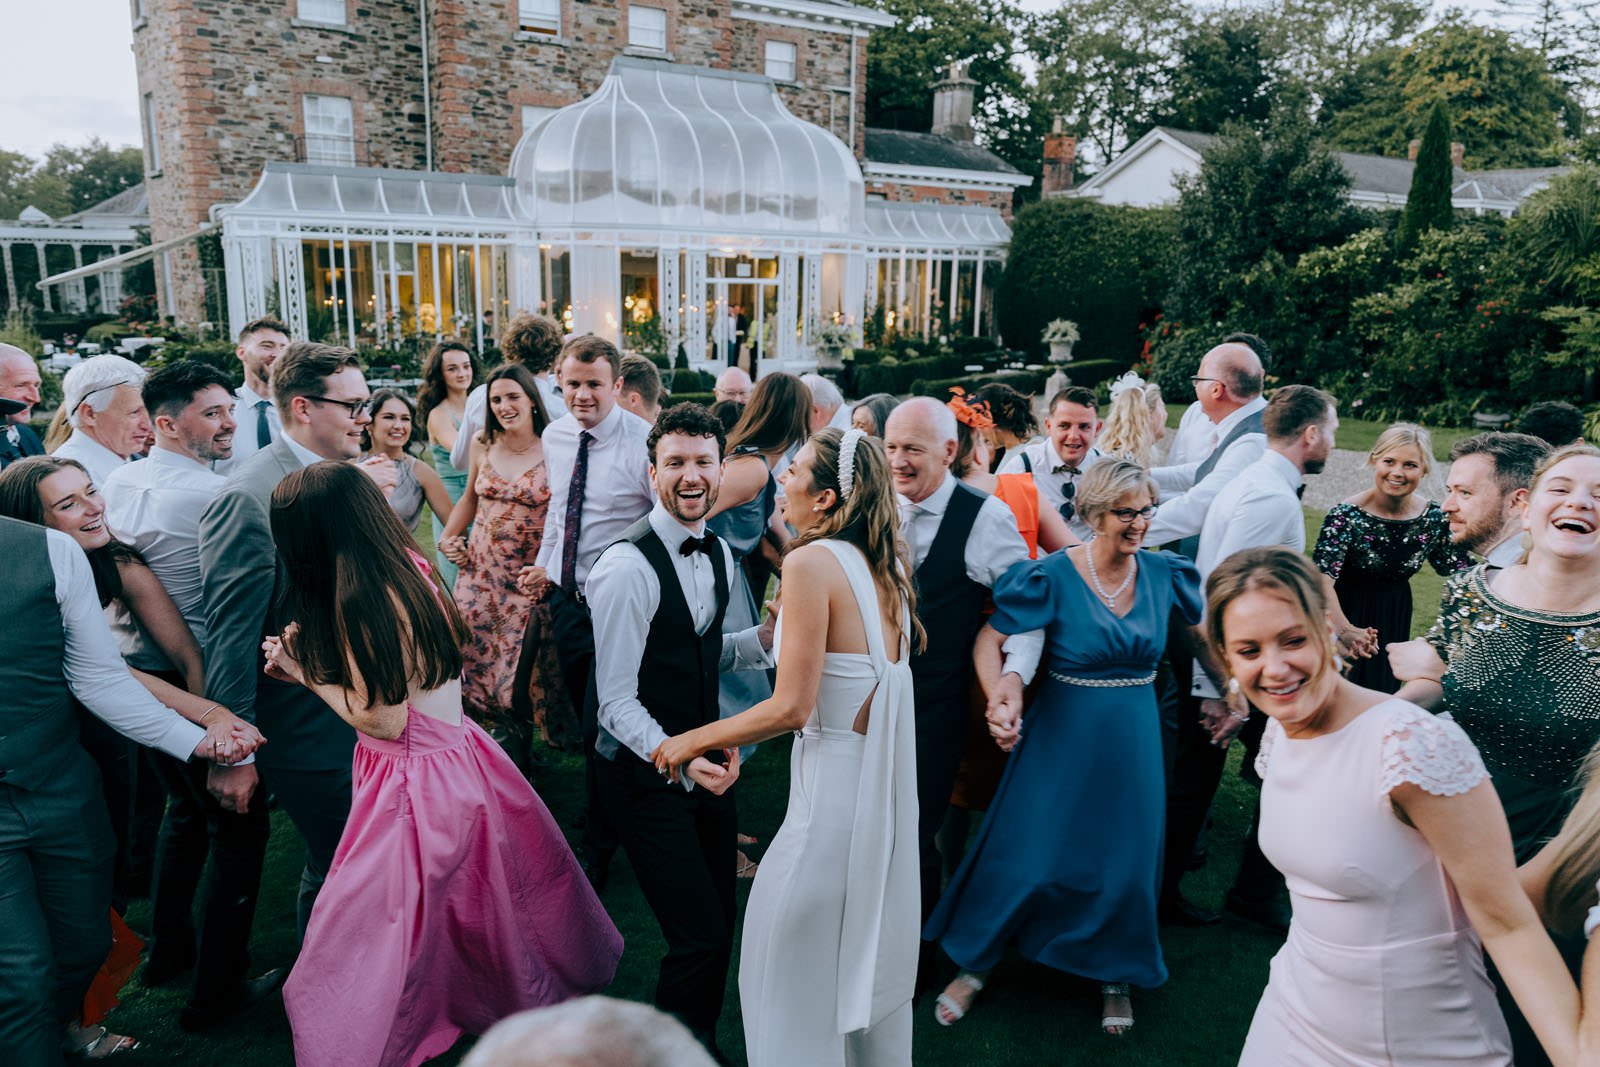 Marlfield_House-best-wedding-venues-Ireland-26.jpg